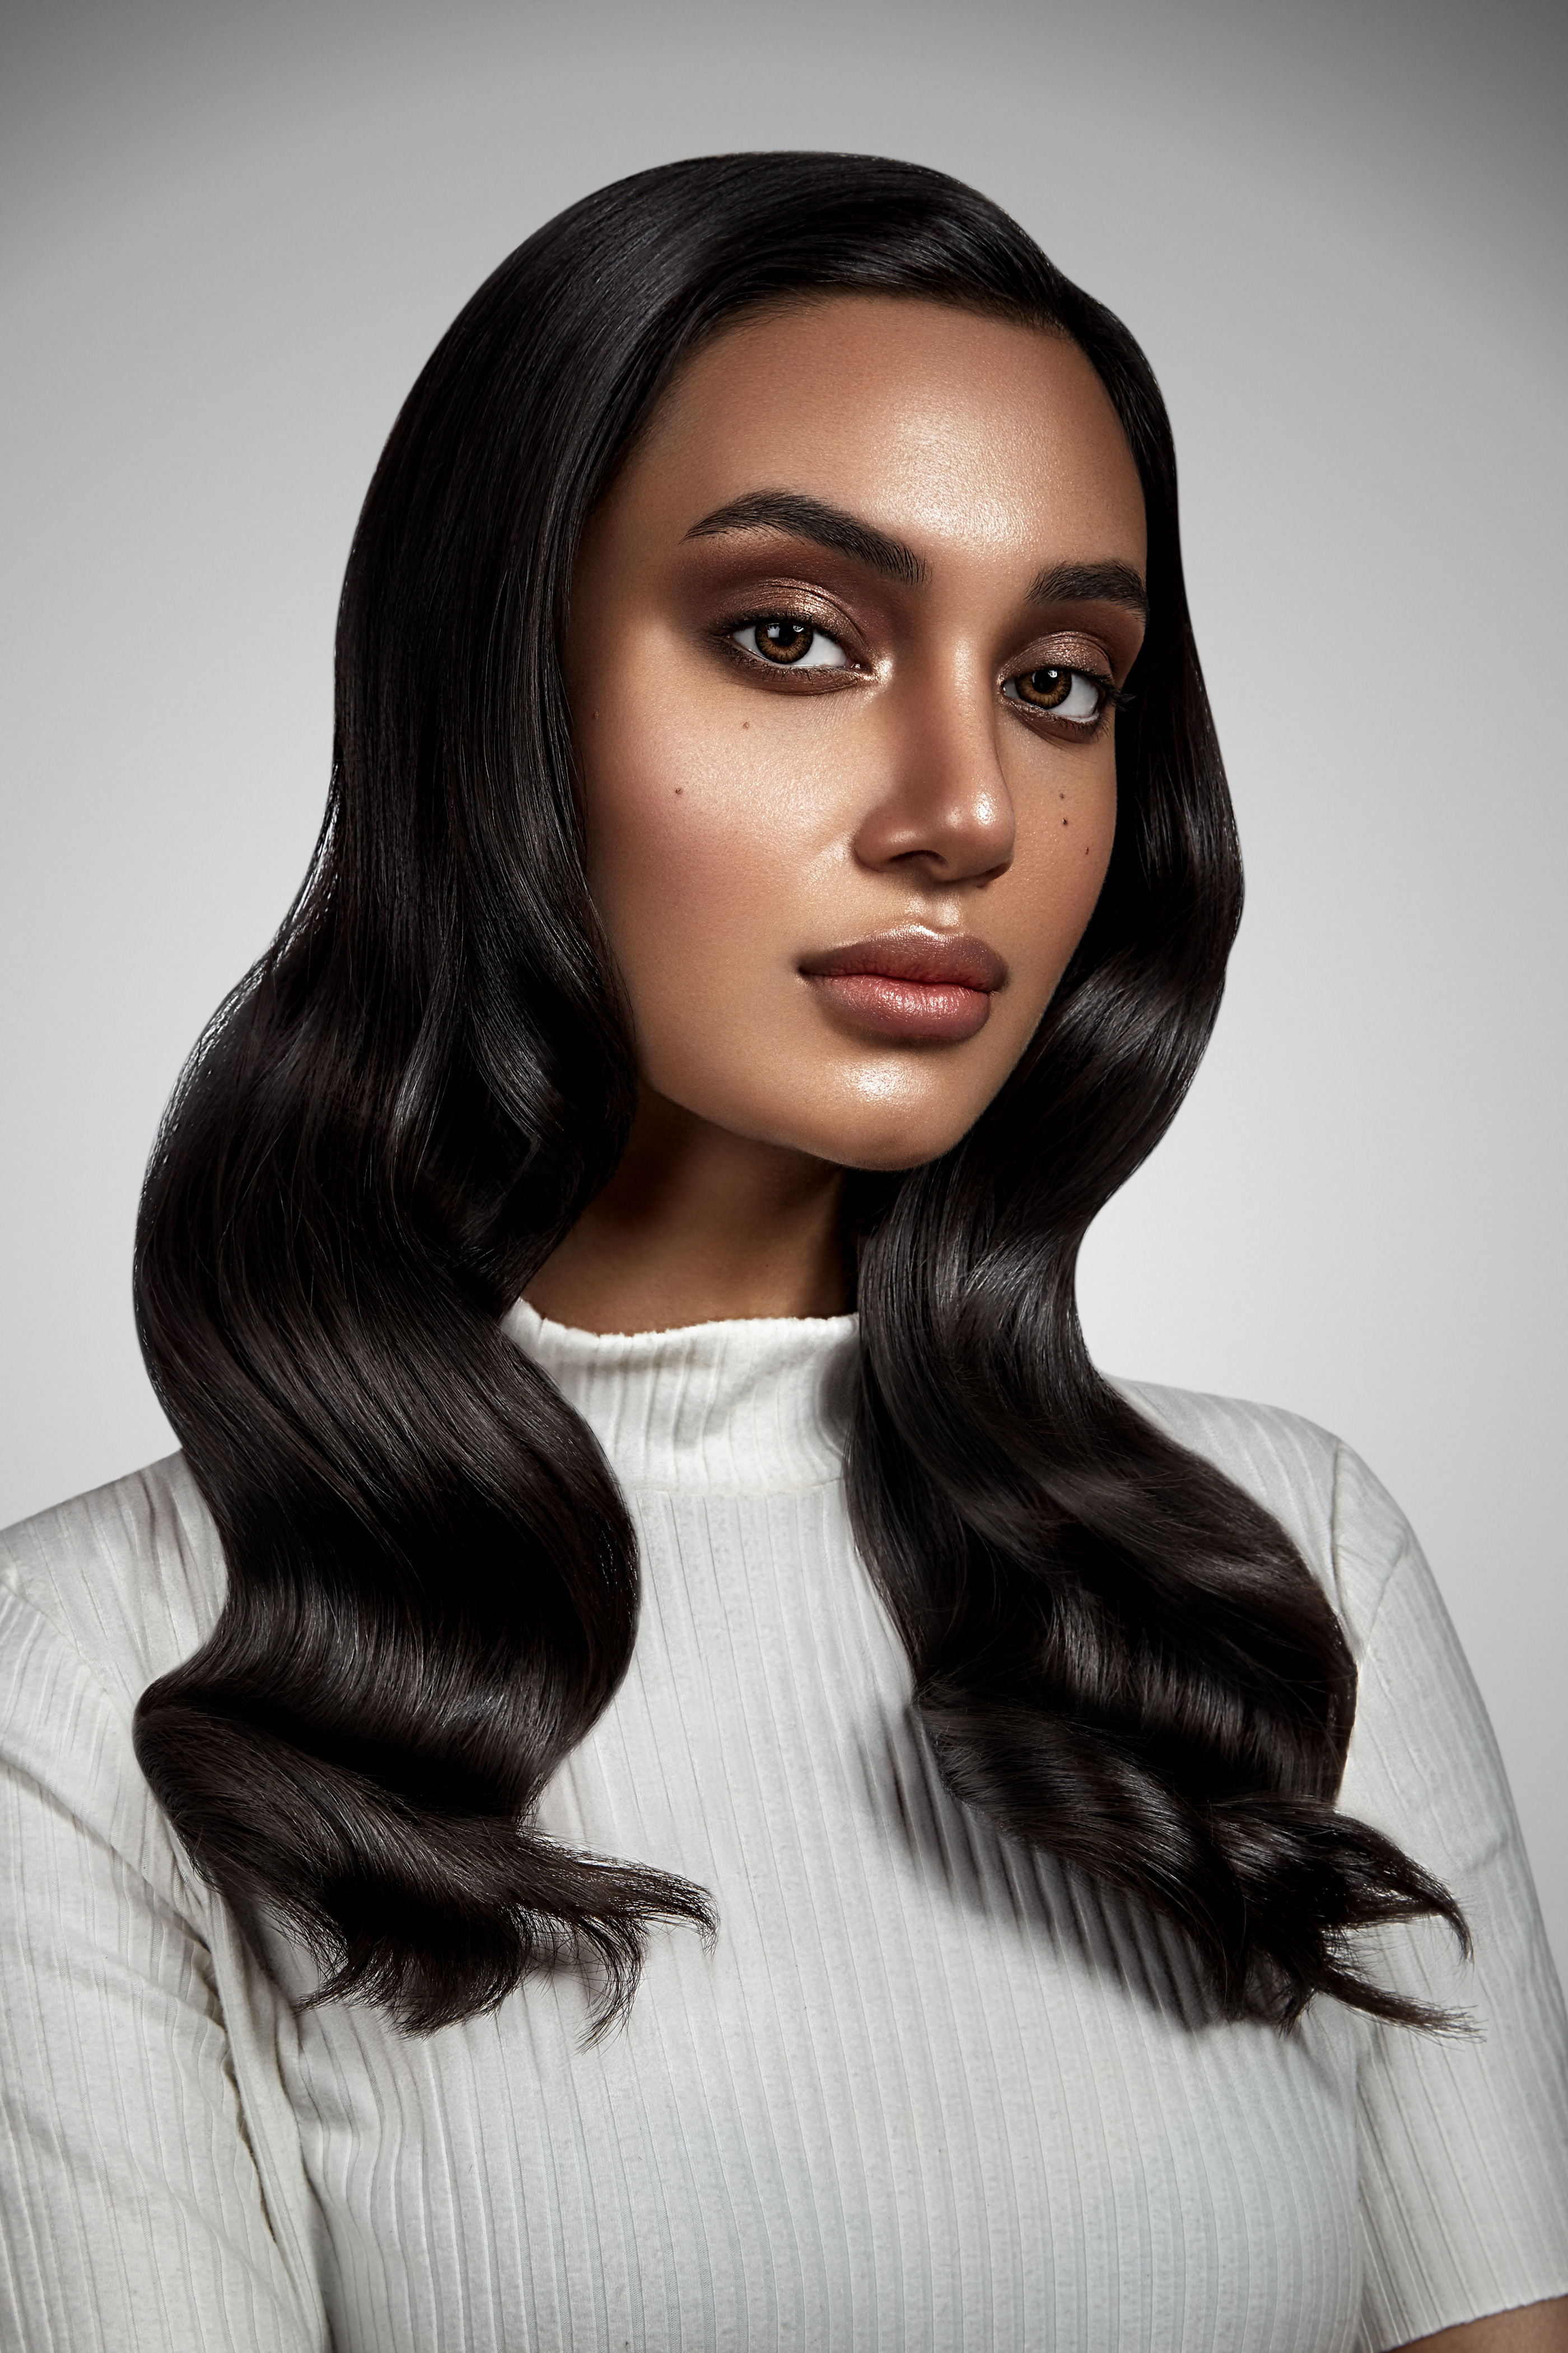 Glossy Hair - Ad shoot on Behance